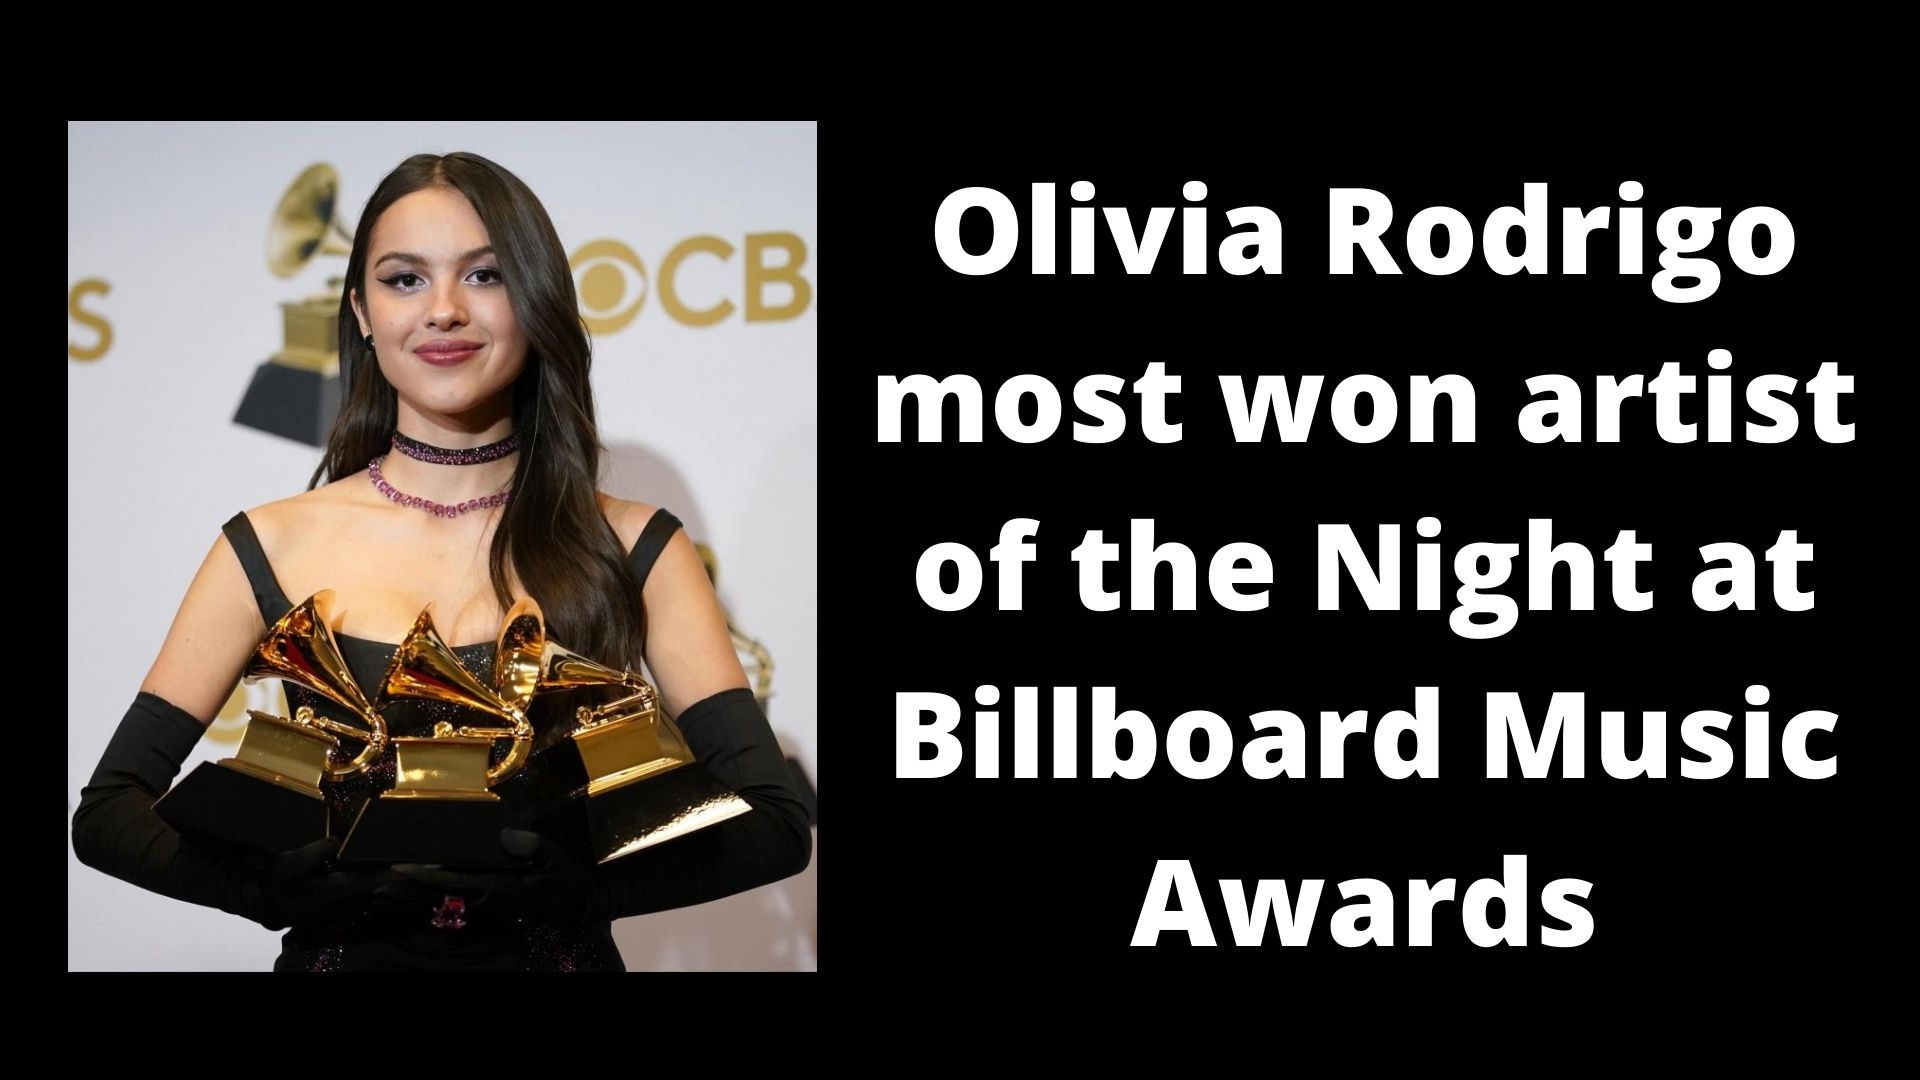 Olivia Rodrigo most won artist of the Night at Billboard Music Awards